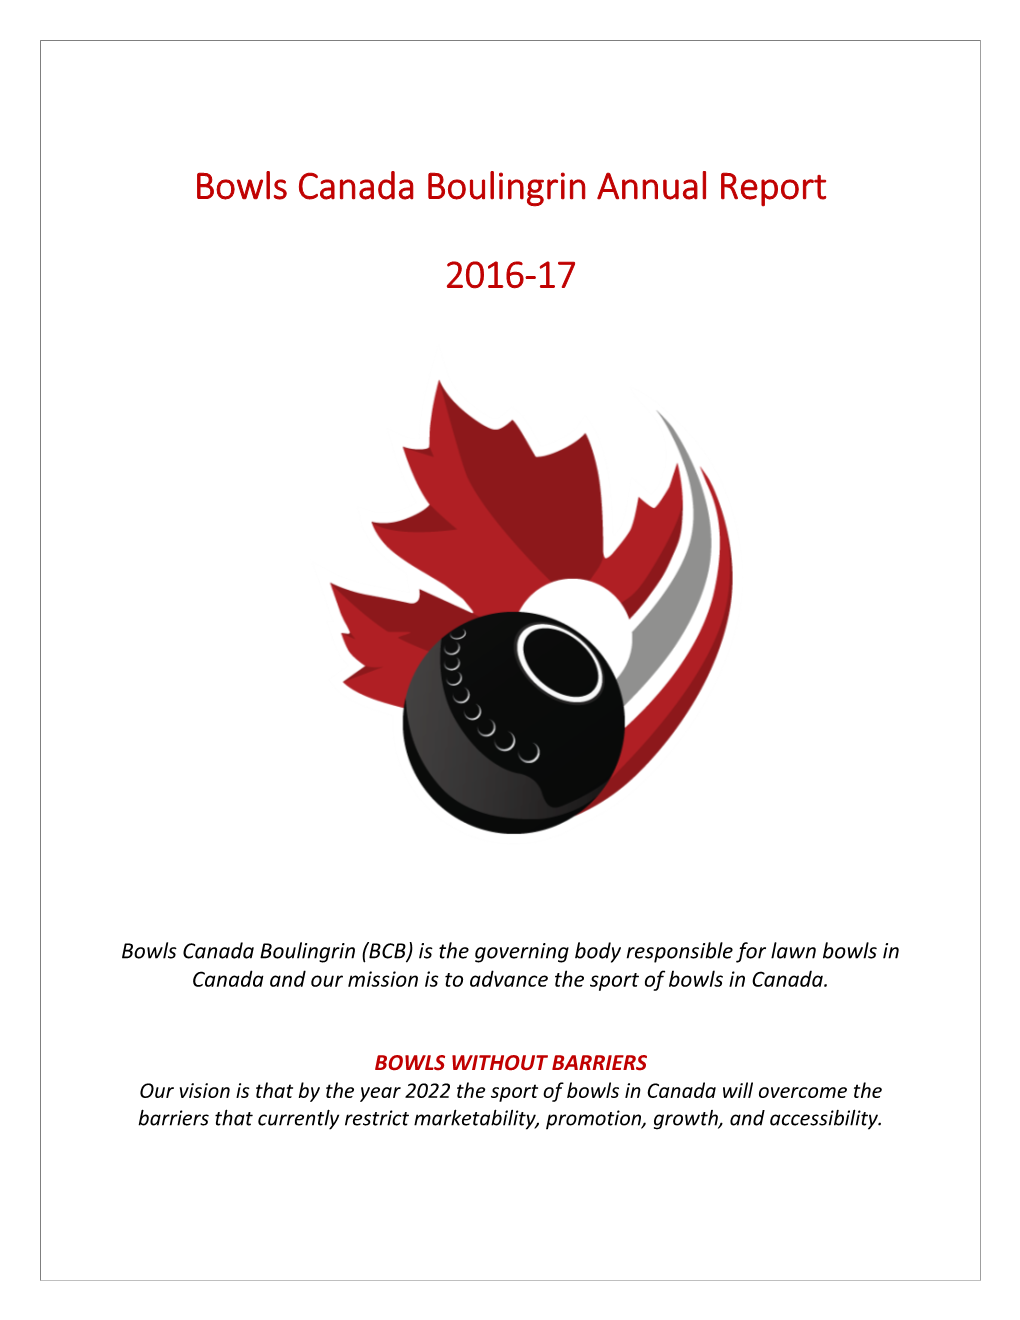 Bowls Canada Boulingrin Annual Report 2016-17